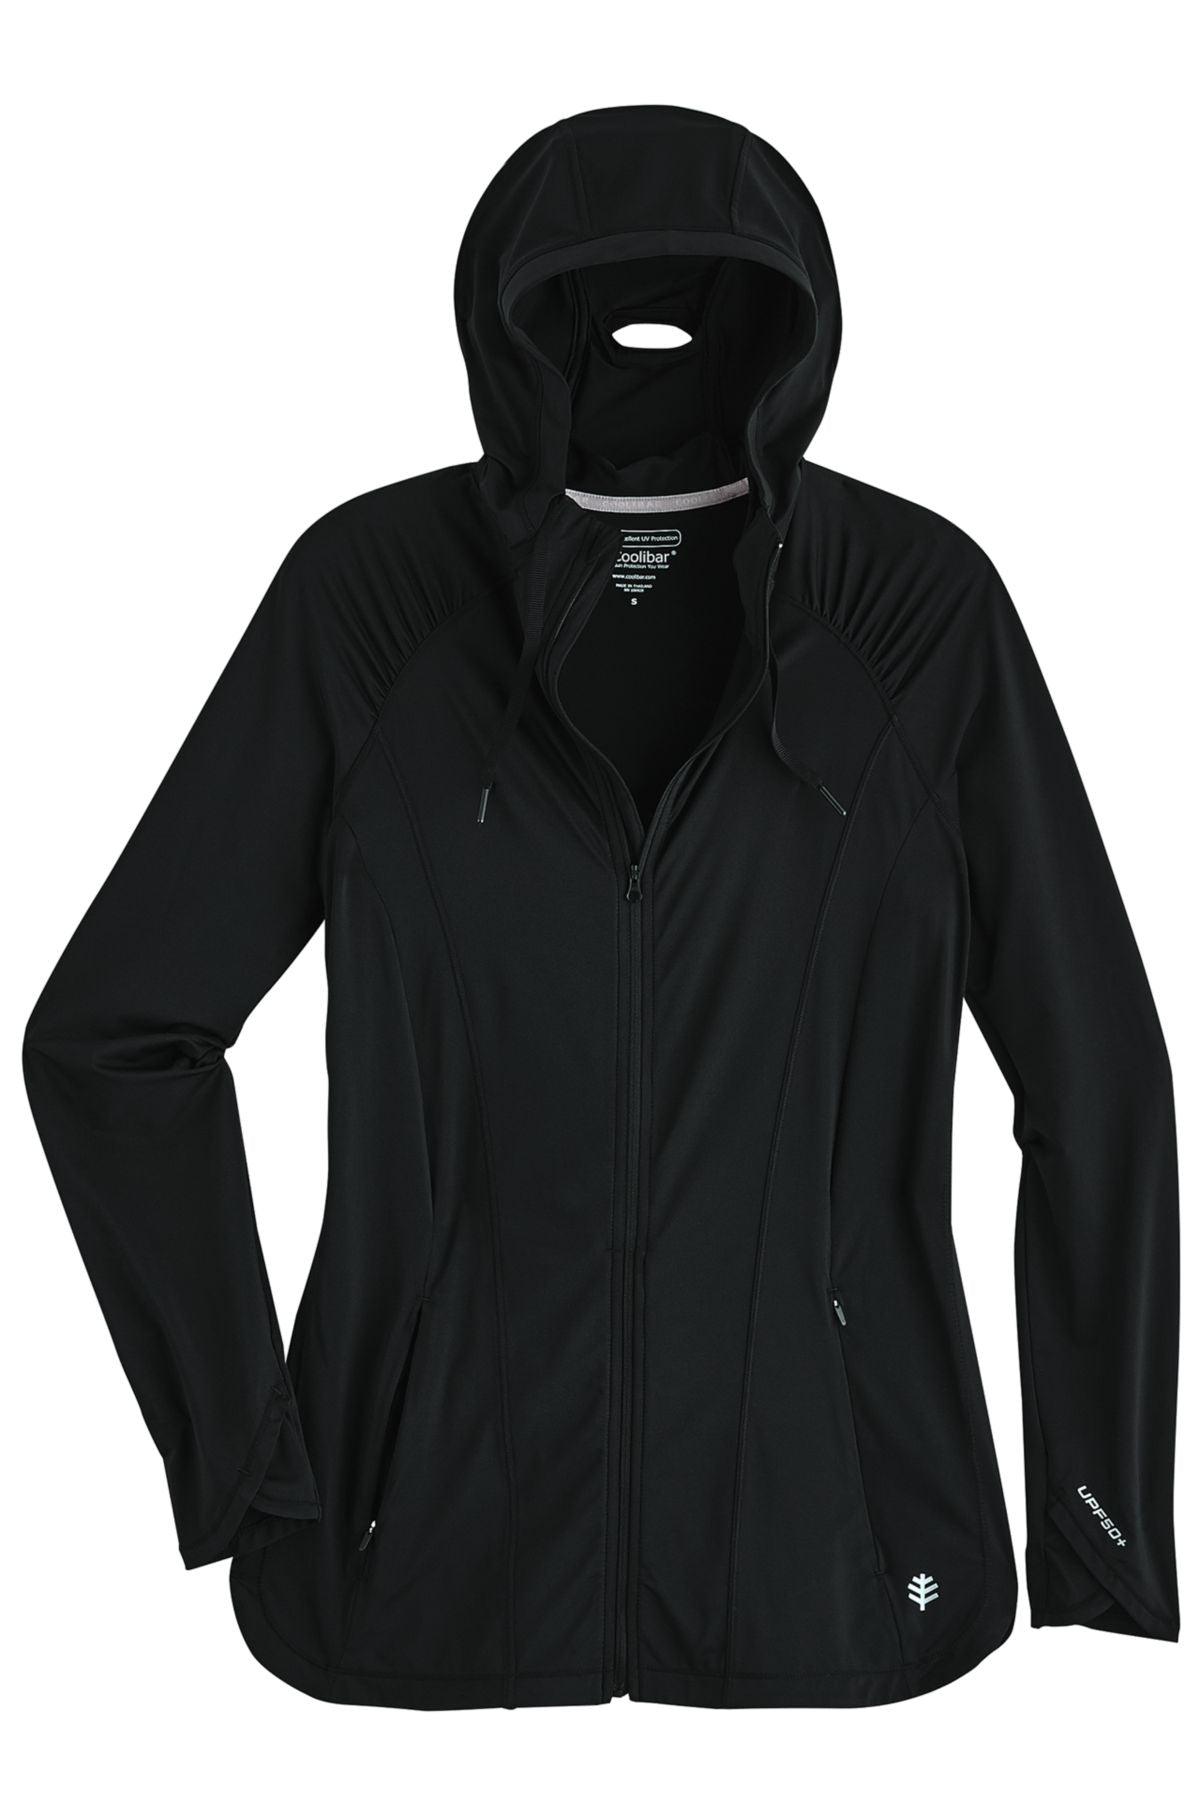 Women's UV Jacket UPF 50+ for sun protection Coolibar Astir – KER SUN